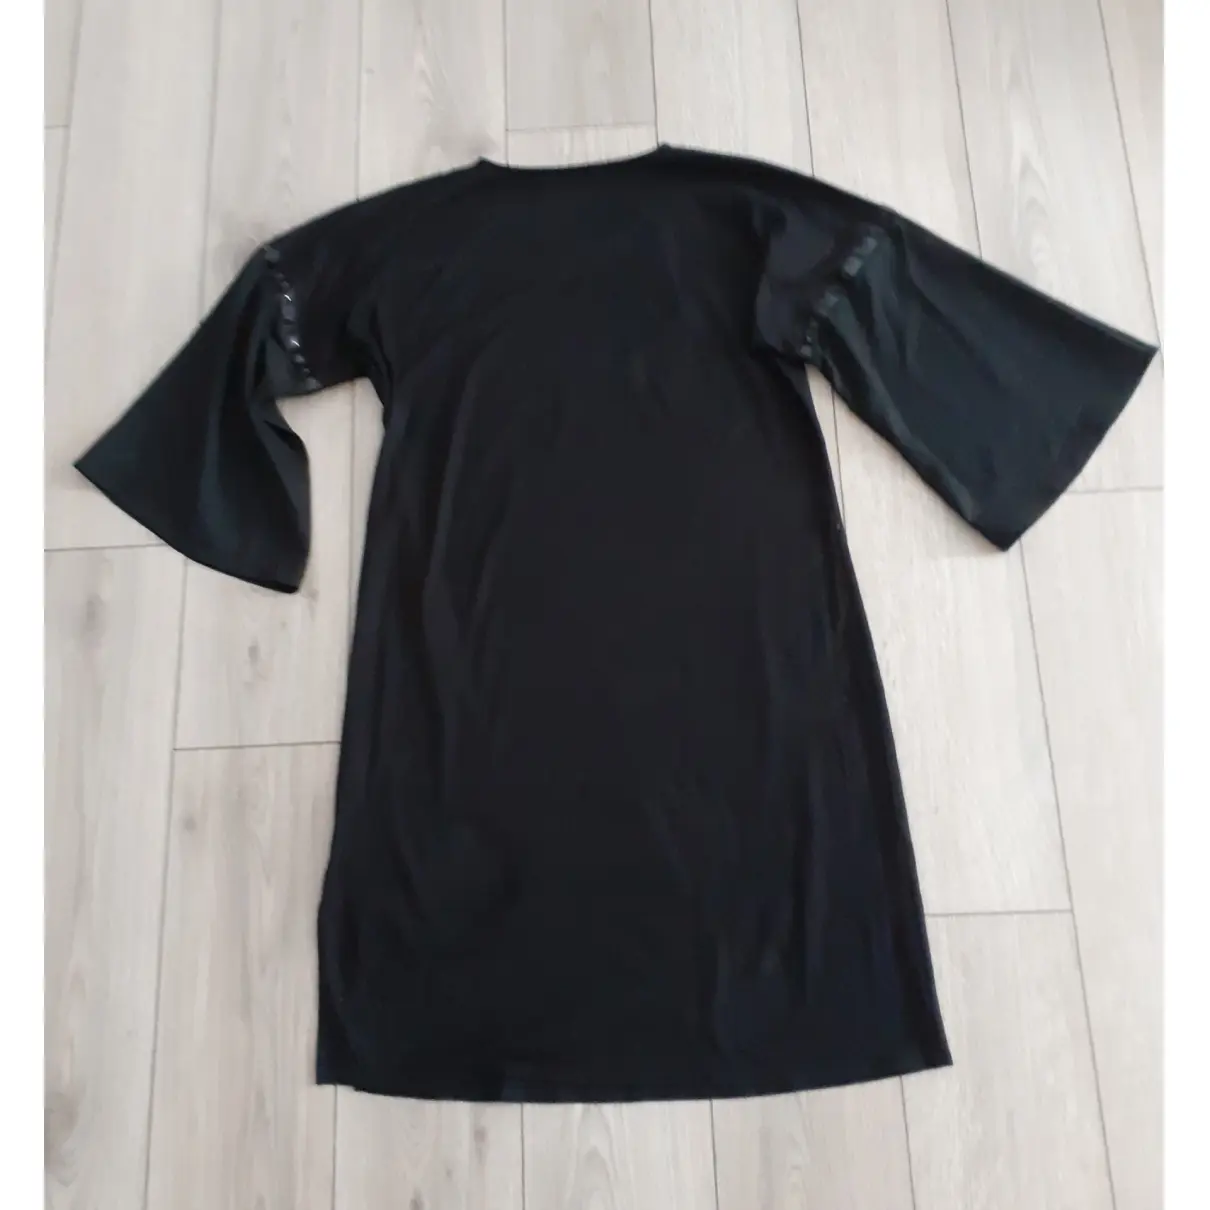 Buy Louis Feraud Mid-length dress online